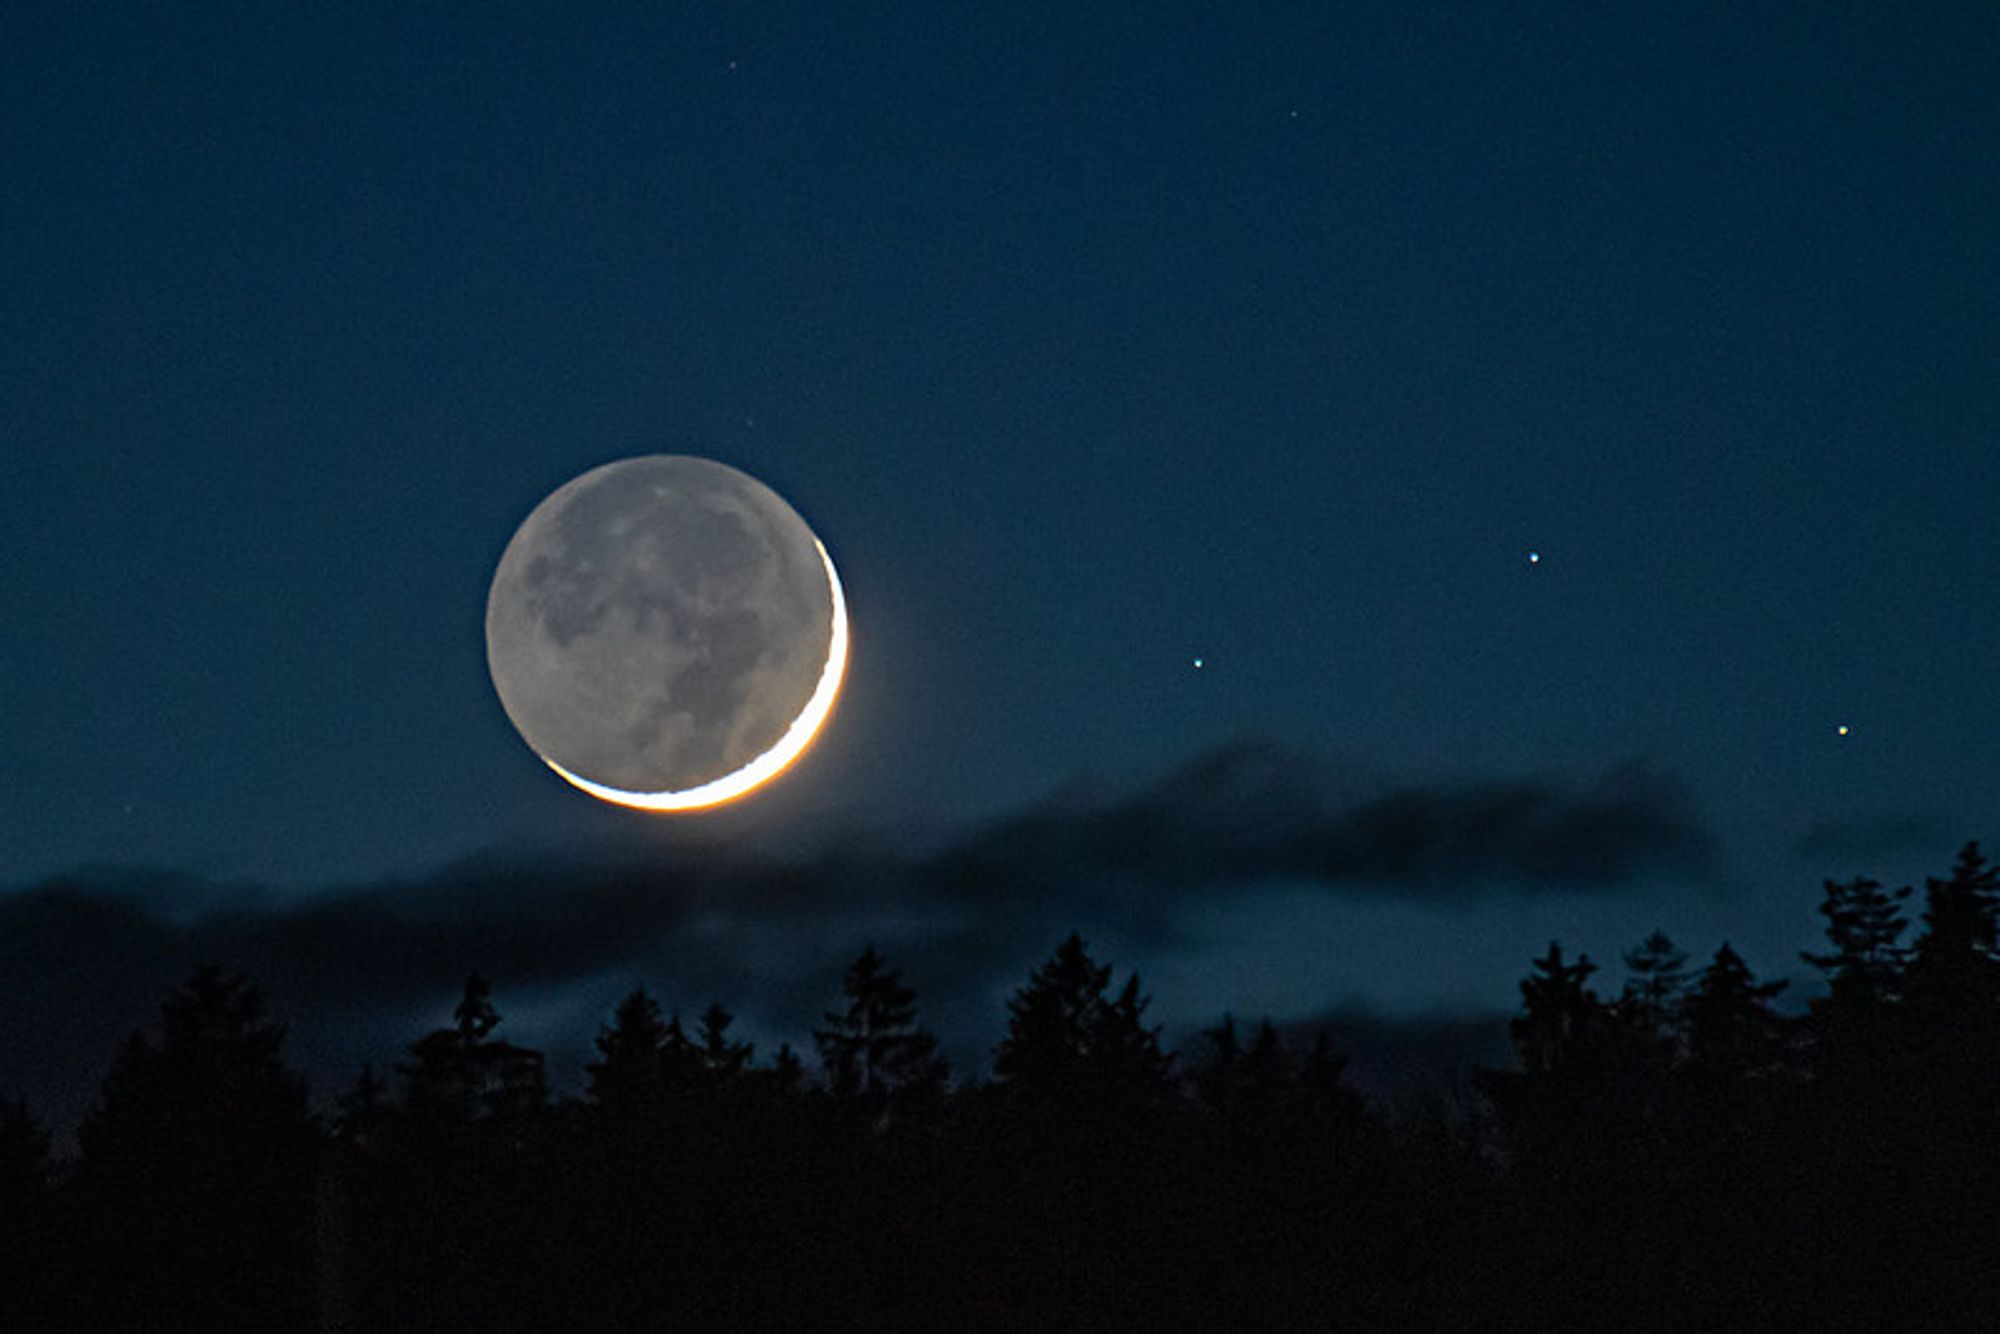 Earthshine moon against a dark blue sky